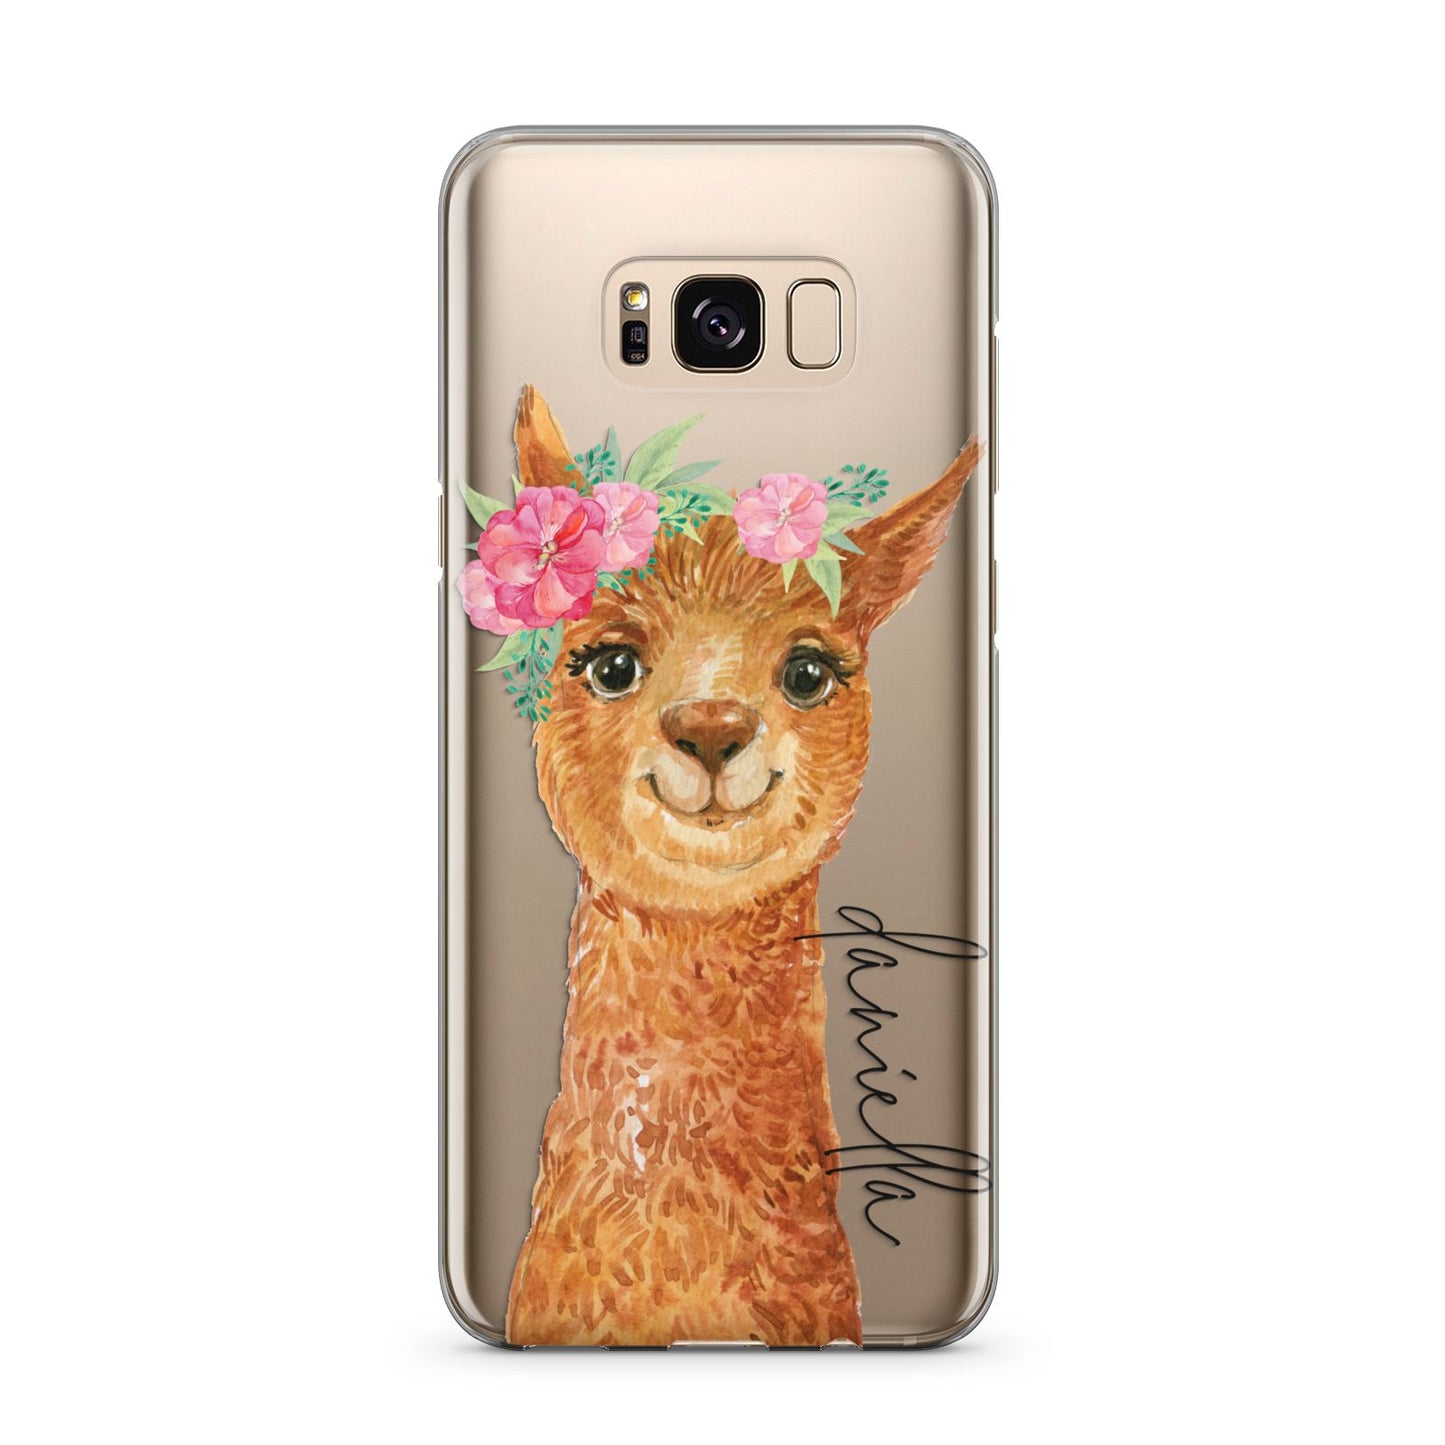 Personalised Llama Samsung Galaxy S8 Plus Case